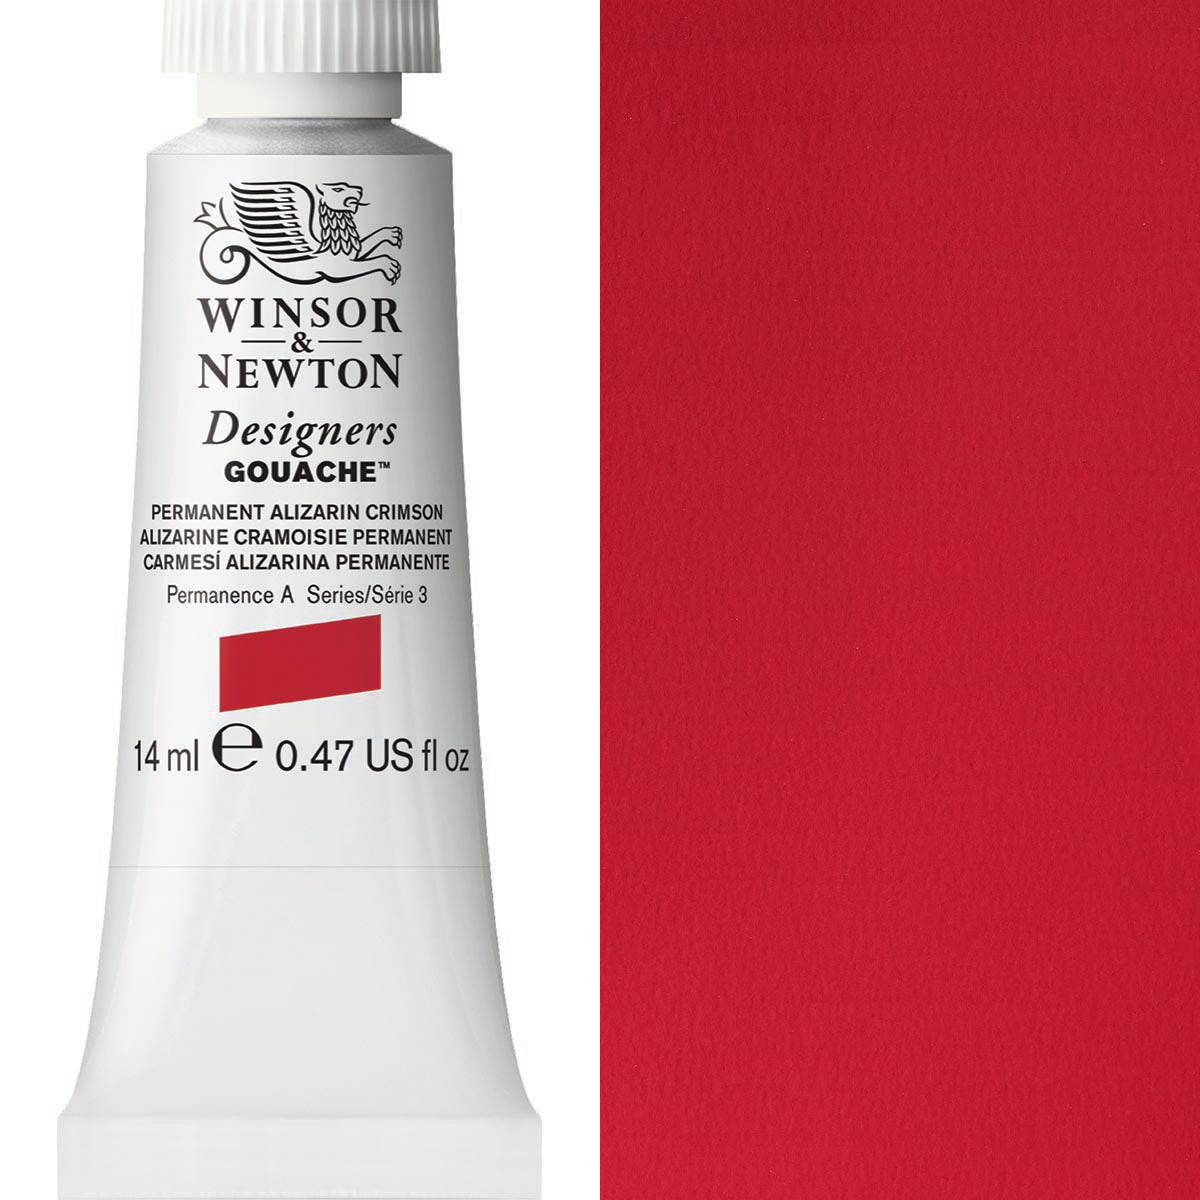 Winsor and Newton - Designers Gouache - 14ml - Permanent Alizarin Crimson